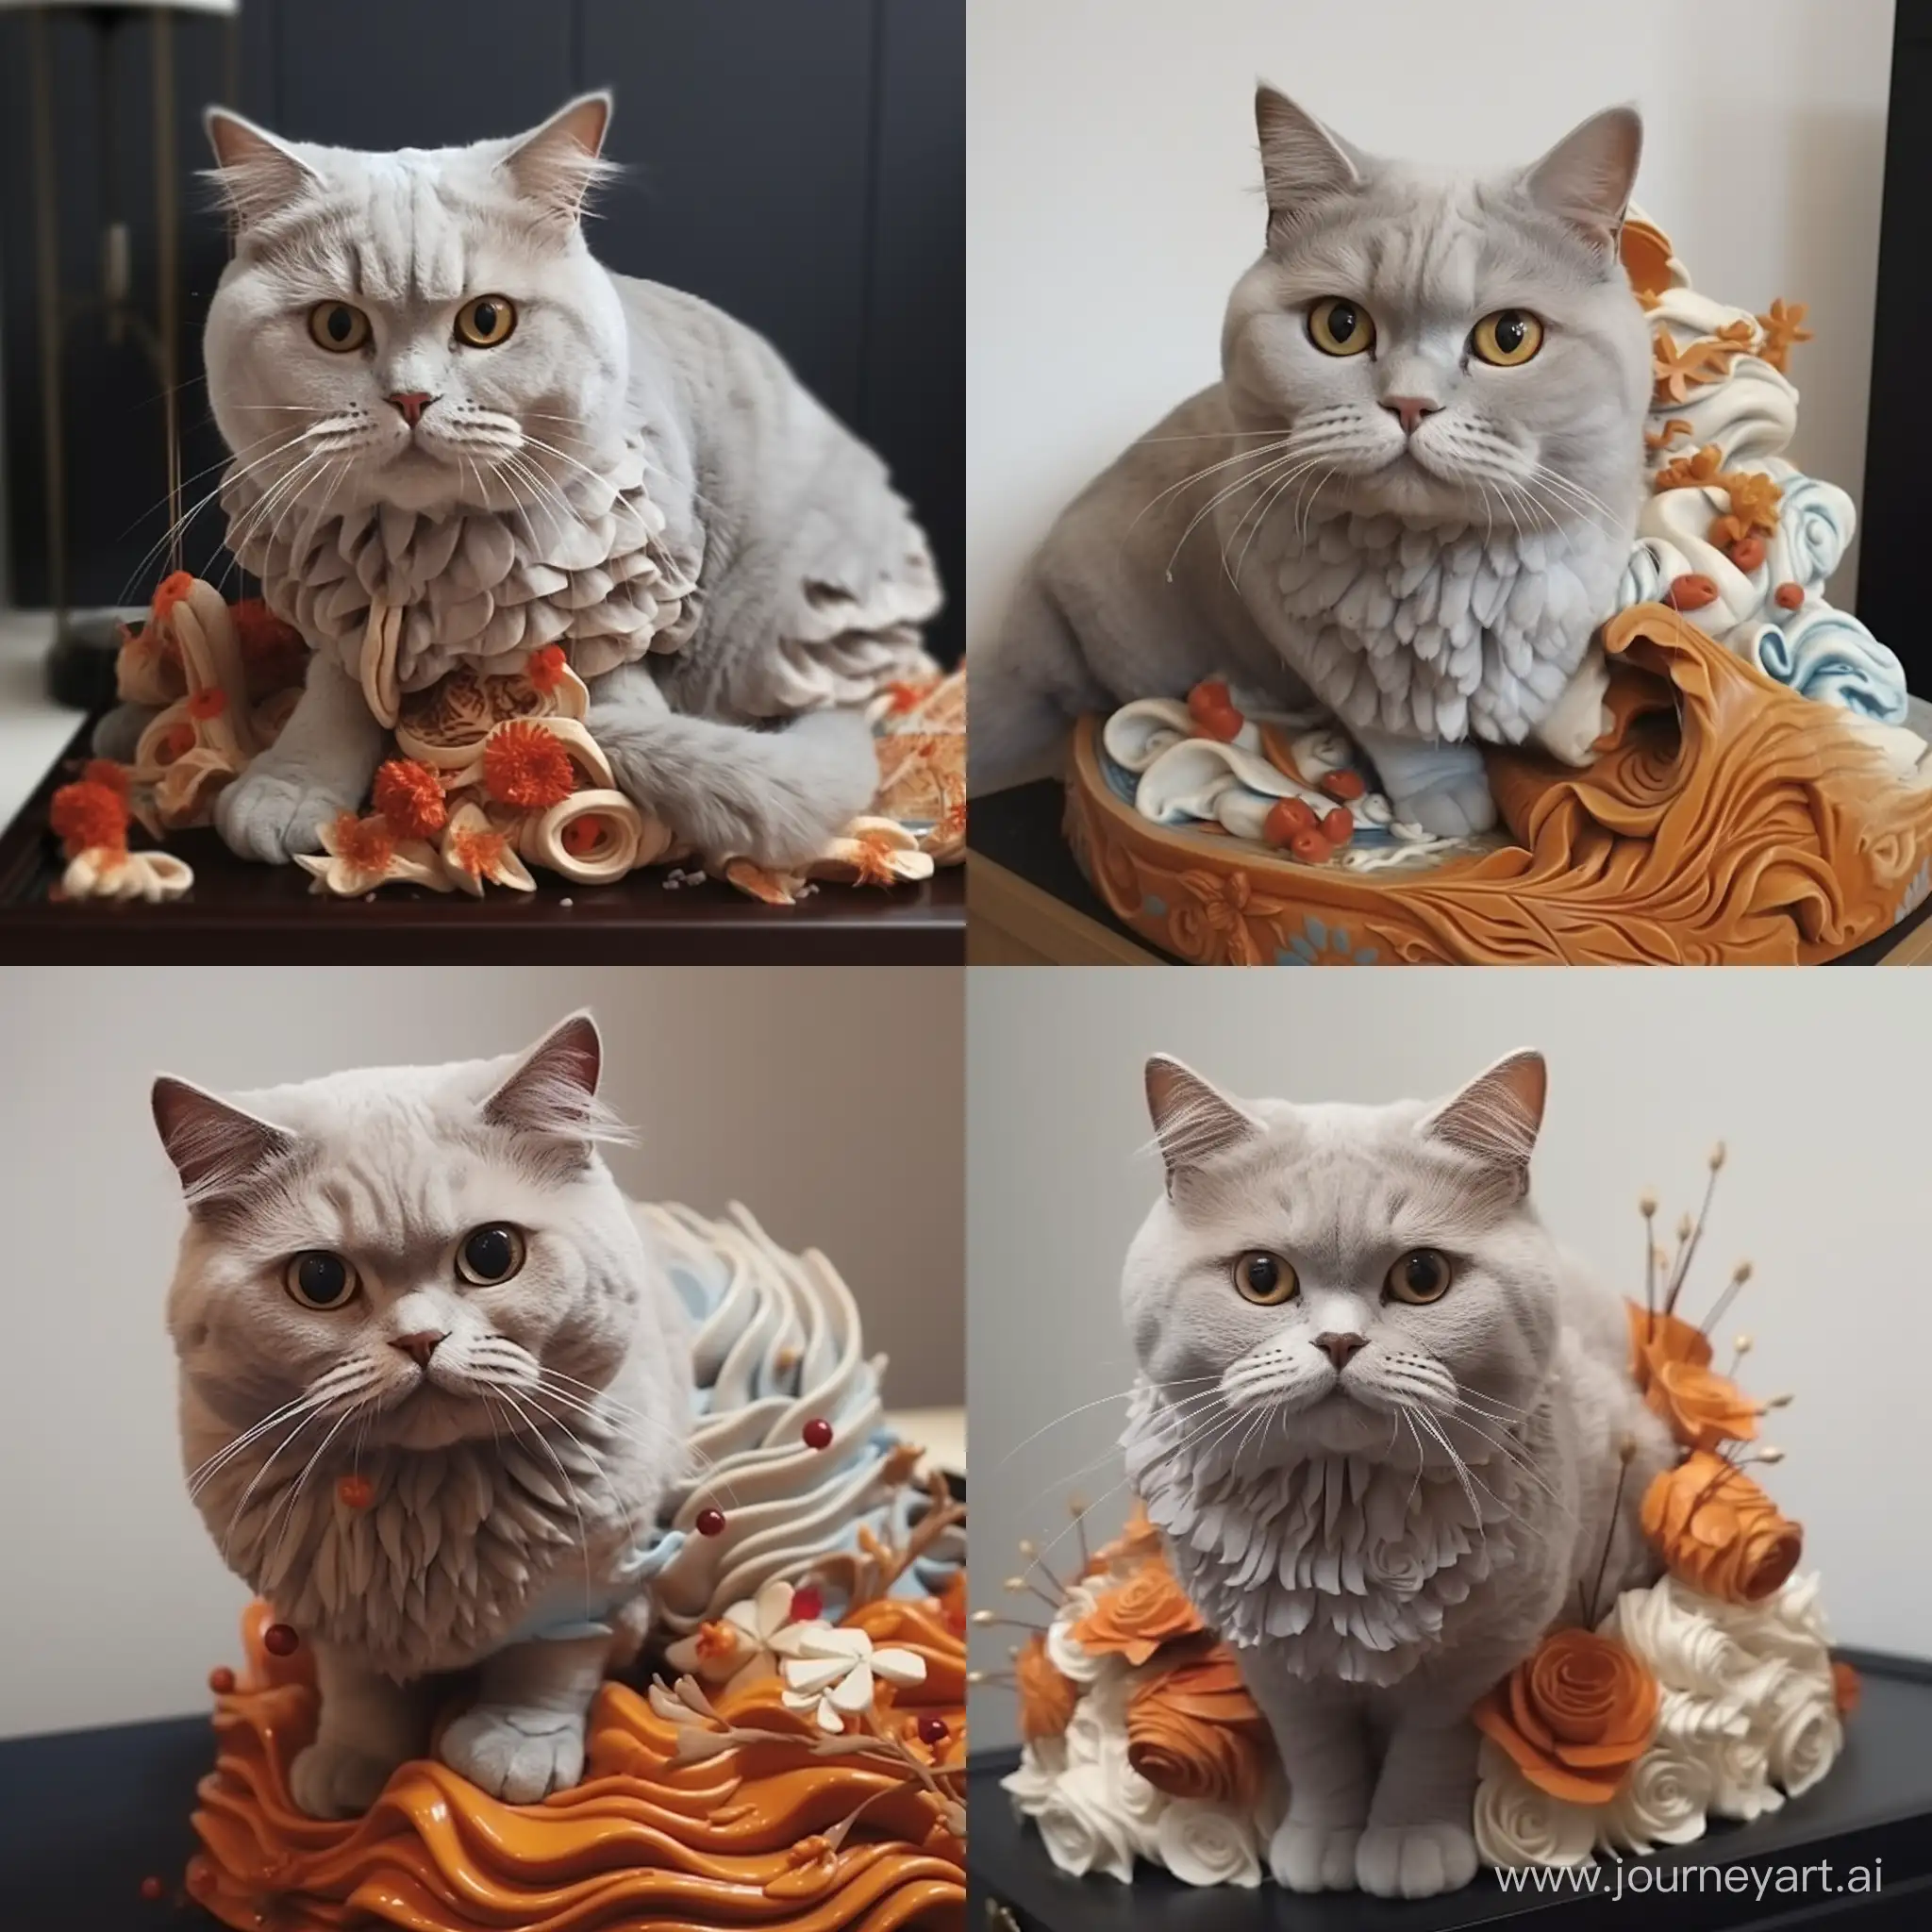 this cat https://i.imgur.com/3rVfpXn.jpg near a bithday cake made of sushi fish